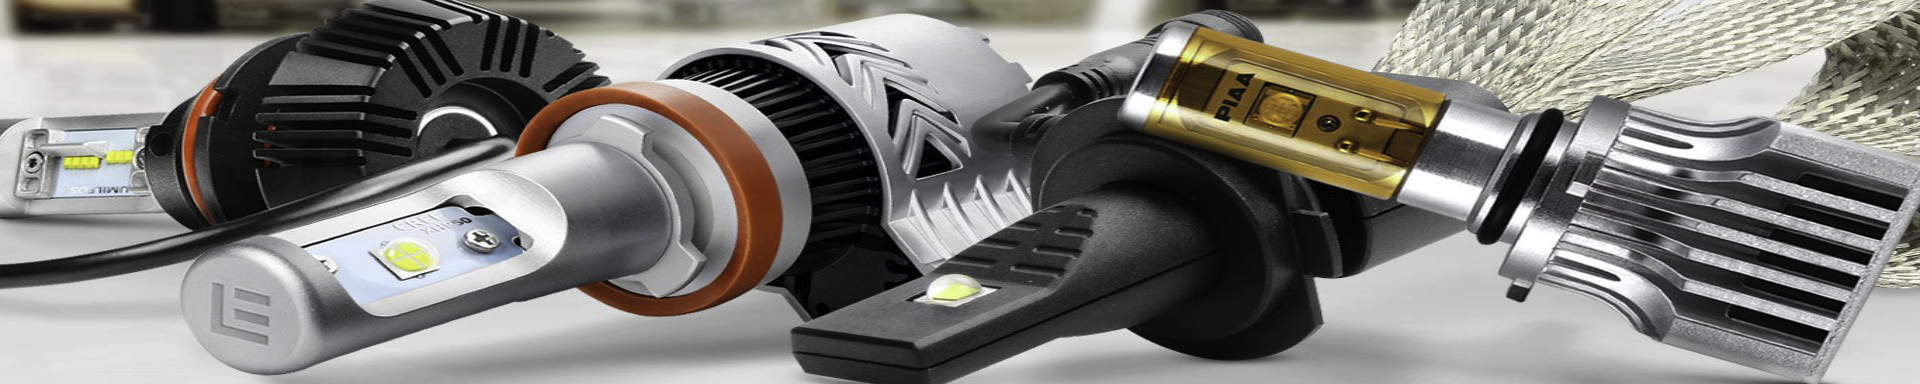 LED Headlight Conversion Kits | GarageAndFab.com | Munro Industries gf-100103060608